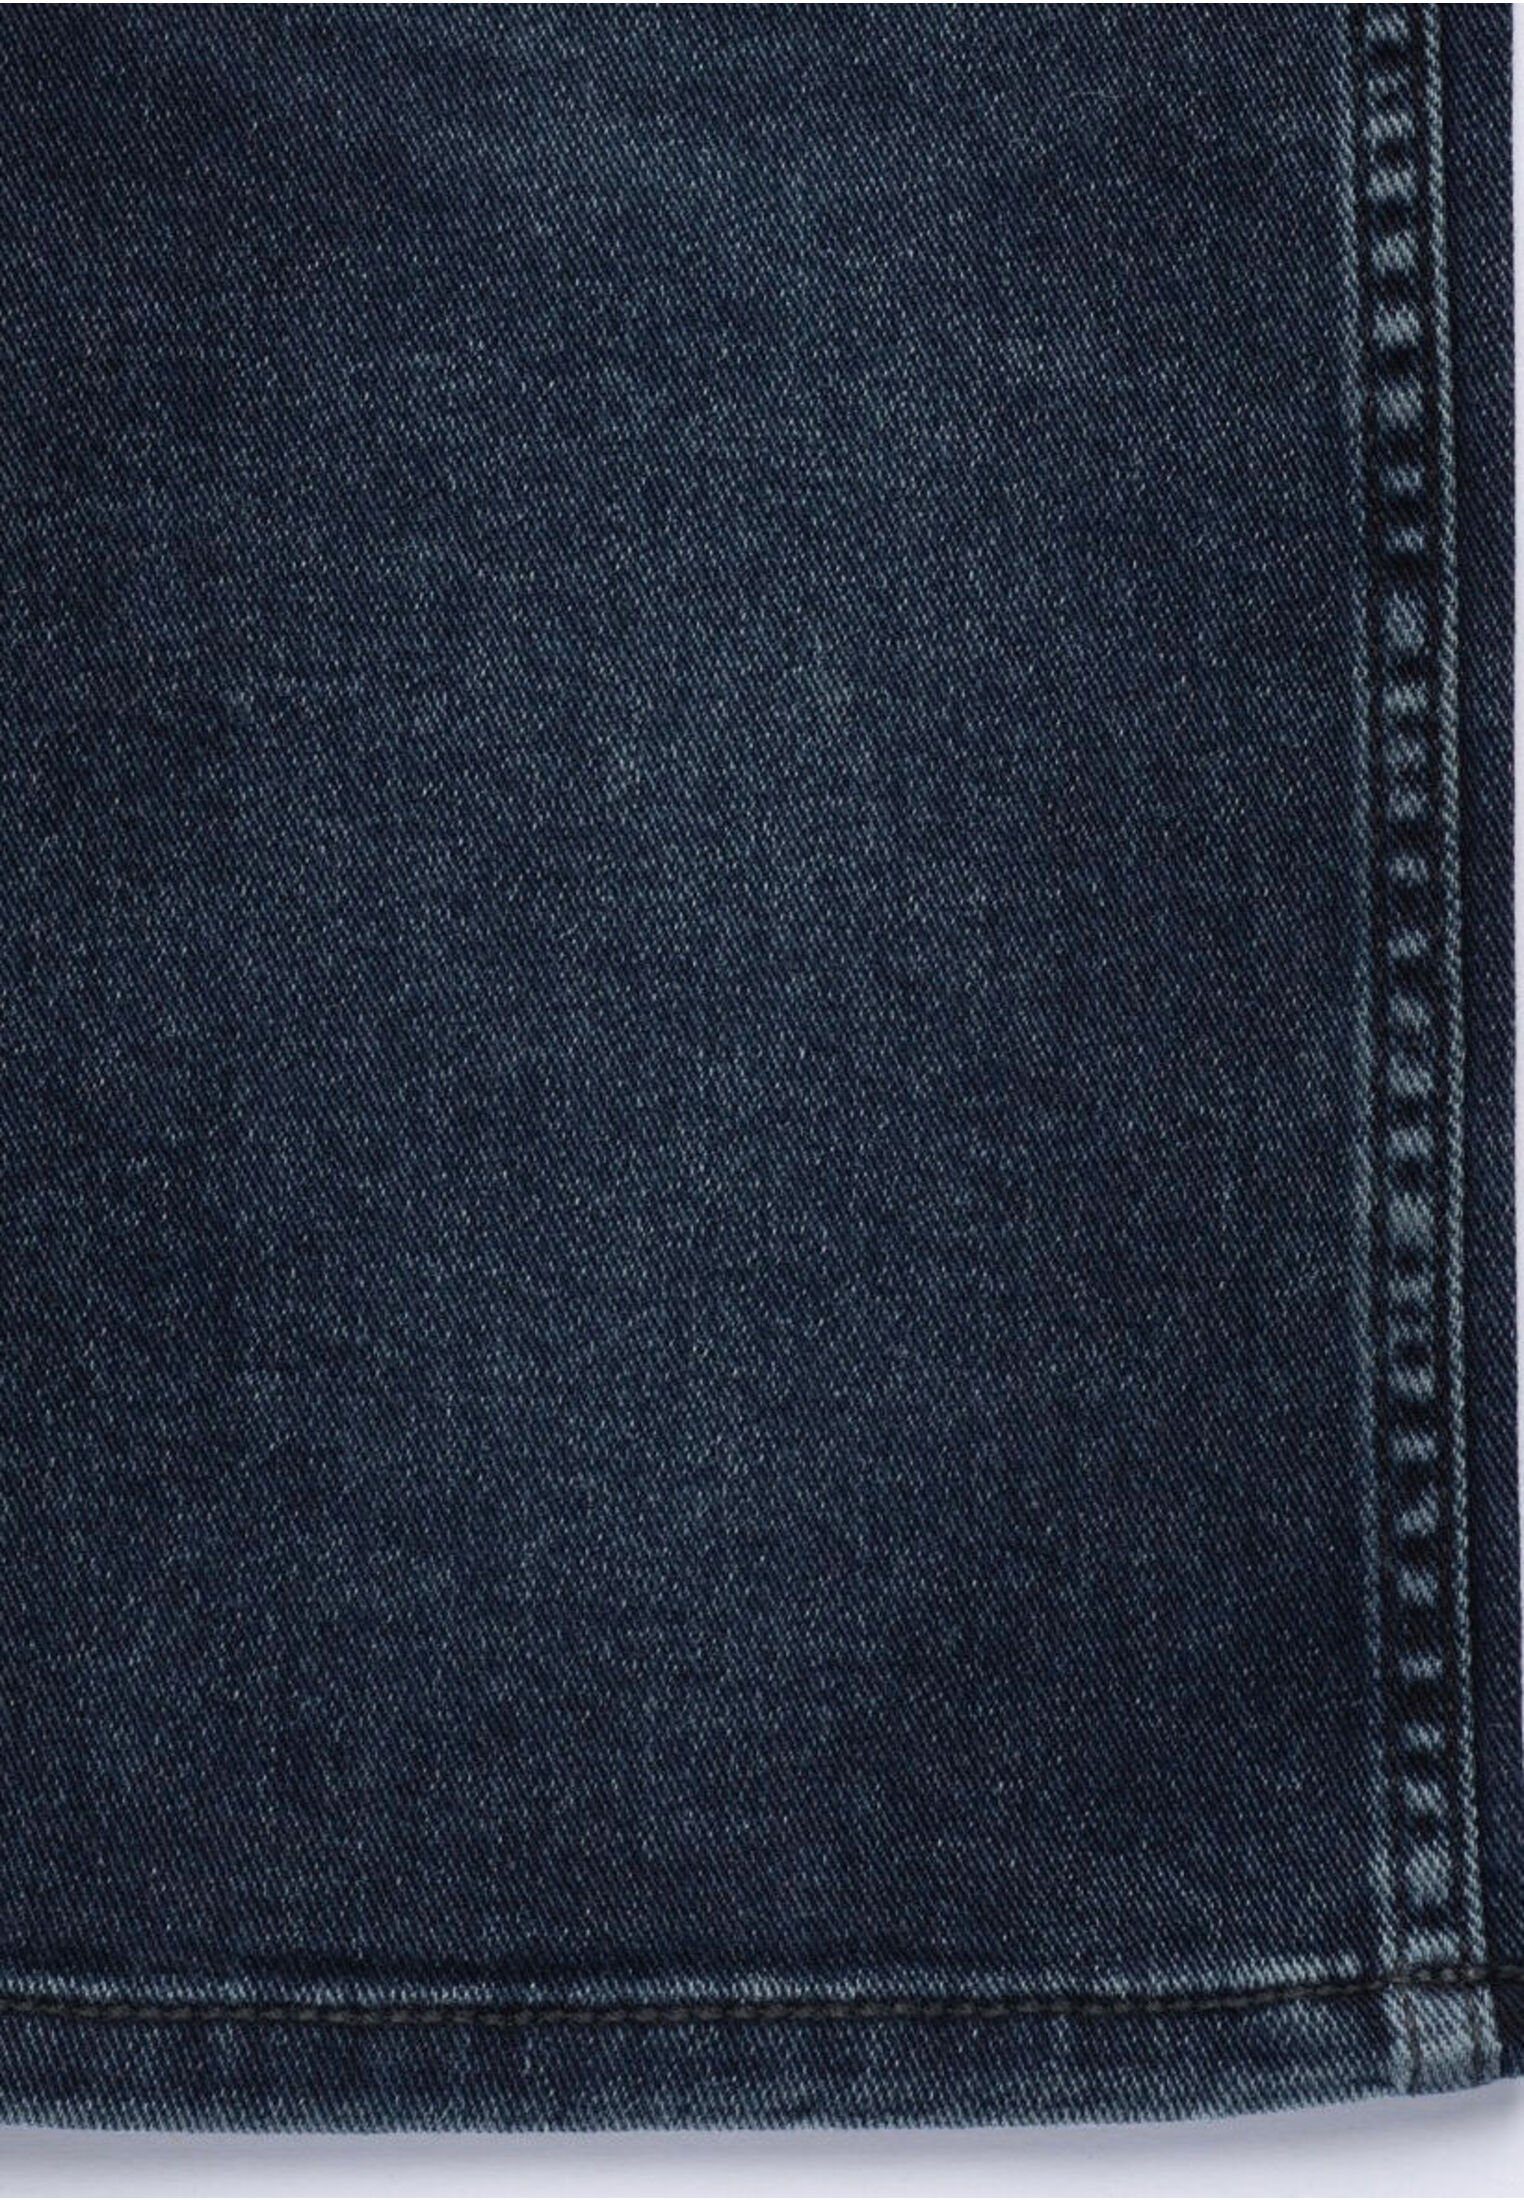 Bugatti 5-pocket jeans